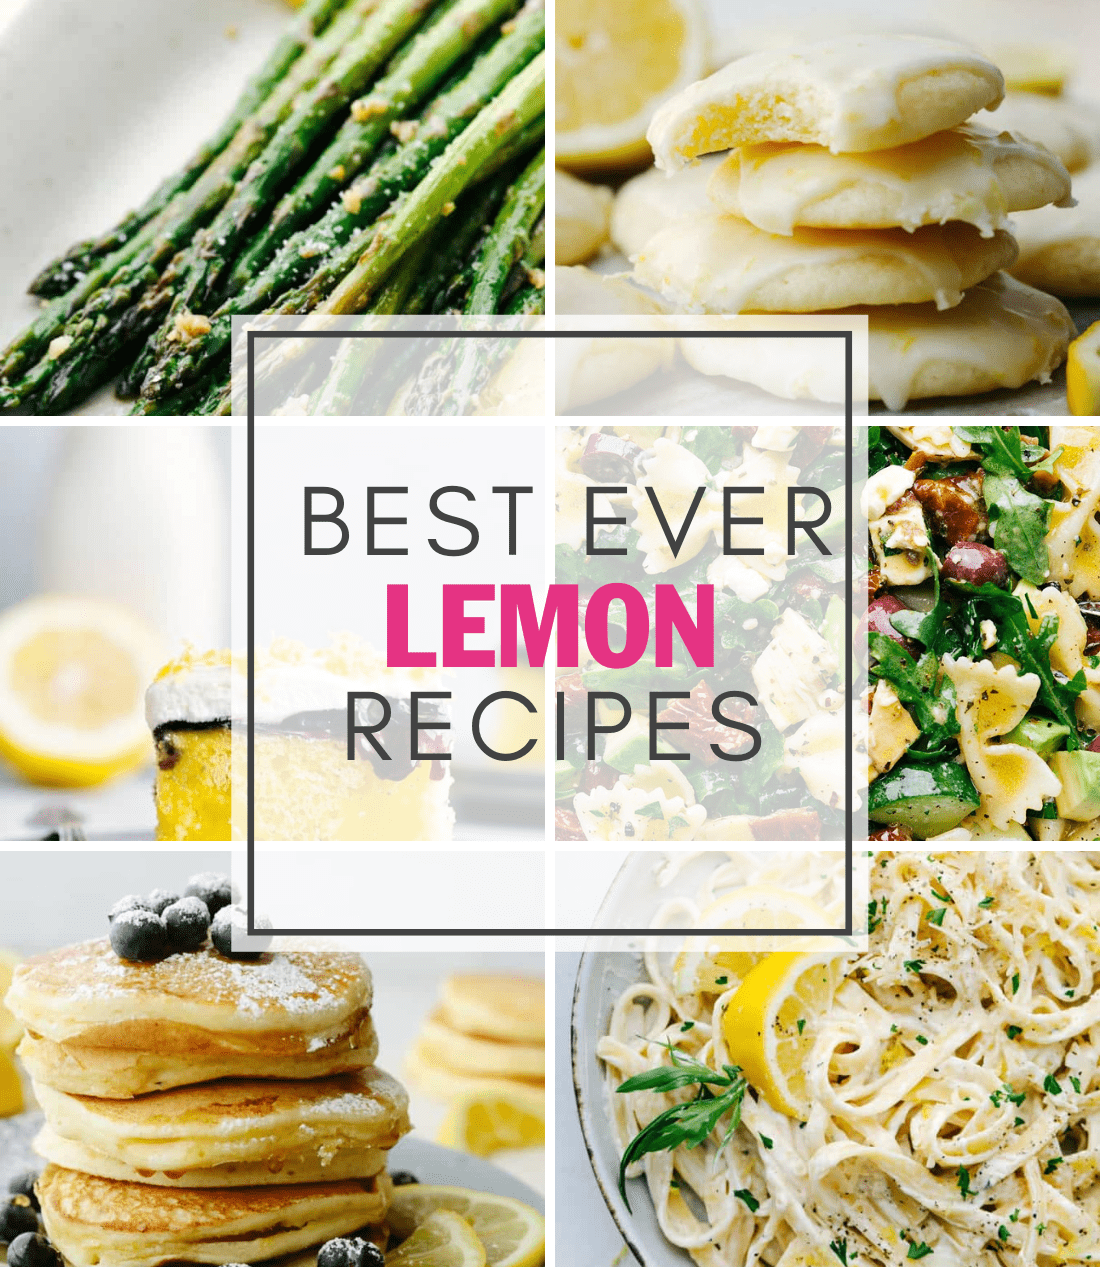 Best Ever Lemon Recipes Roundup - 44